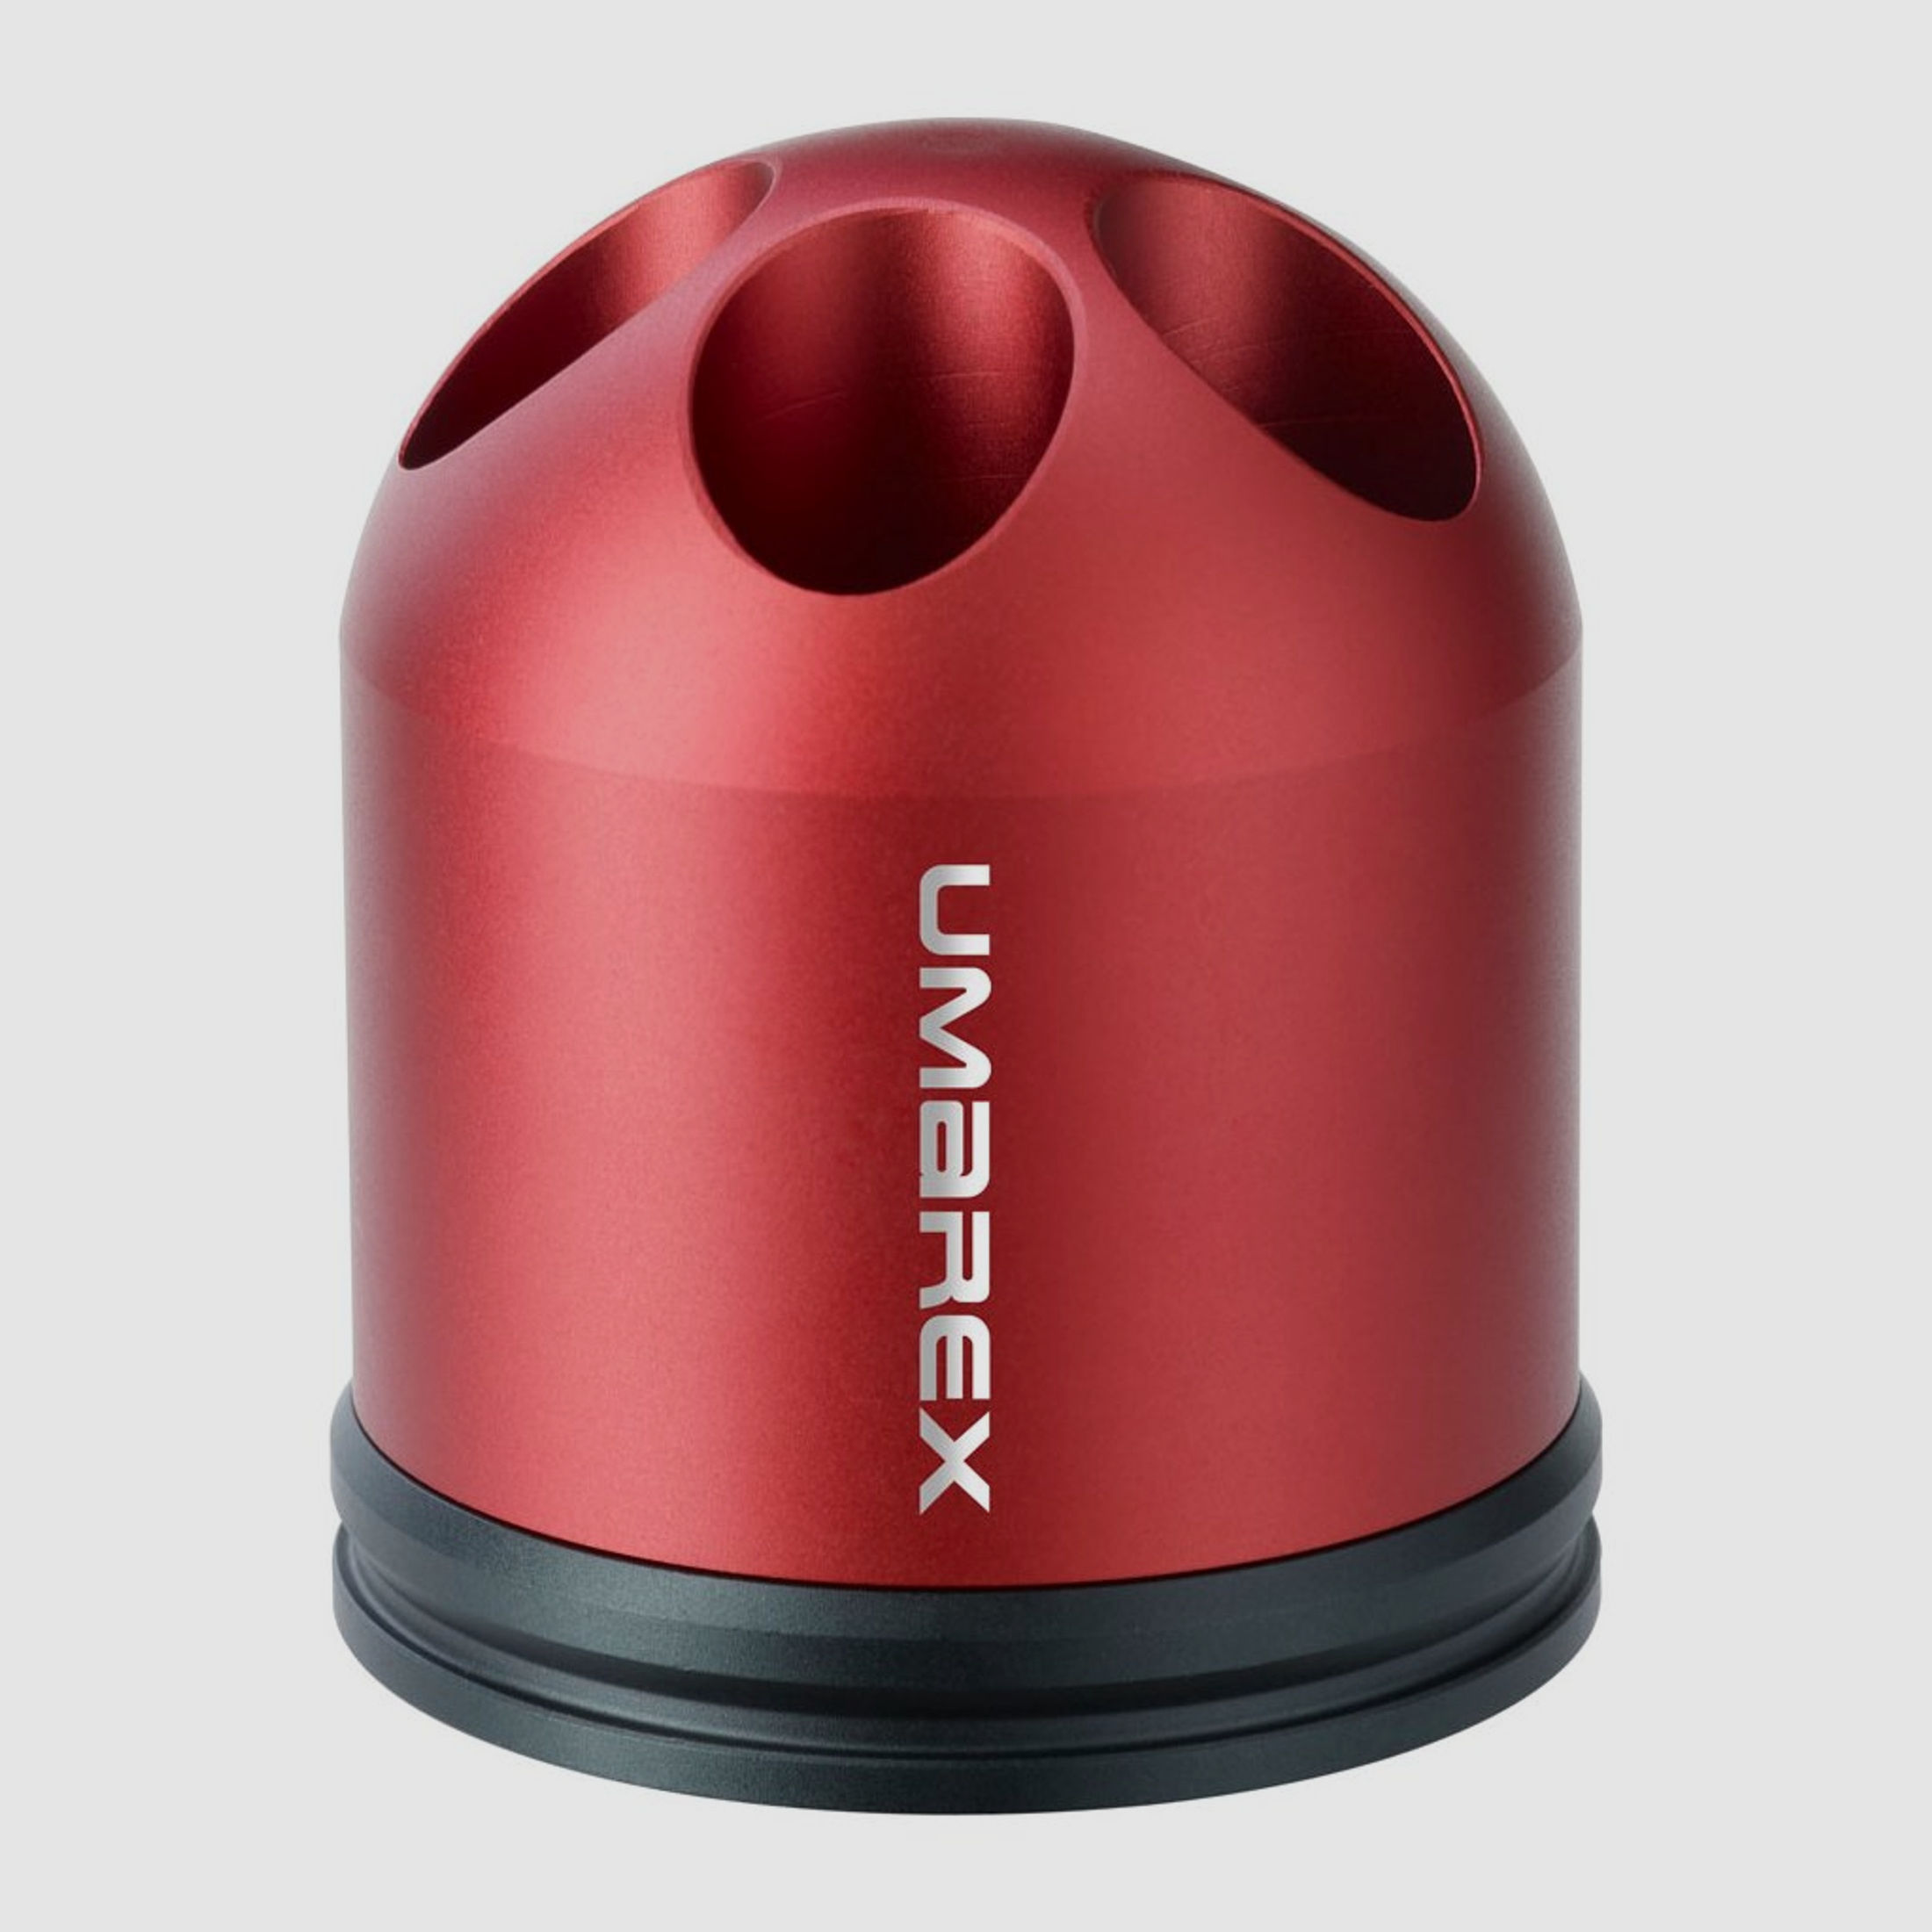 Umarex Pyro Launcher RED